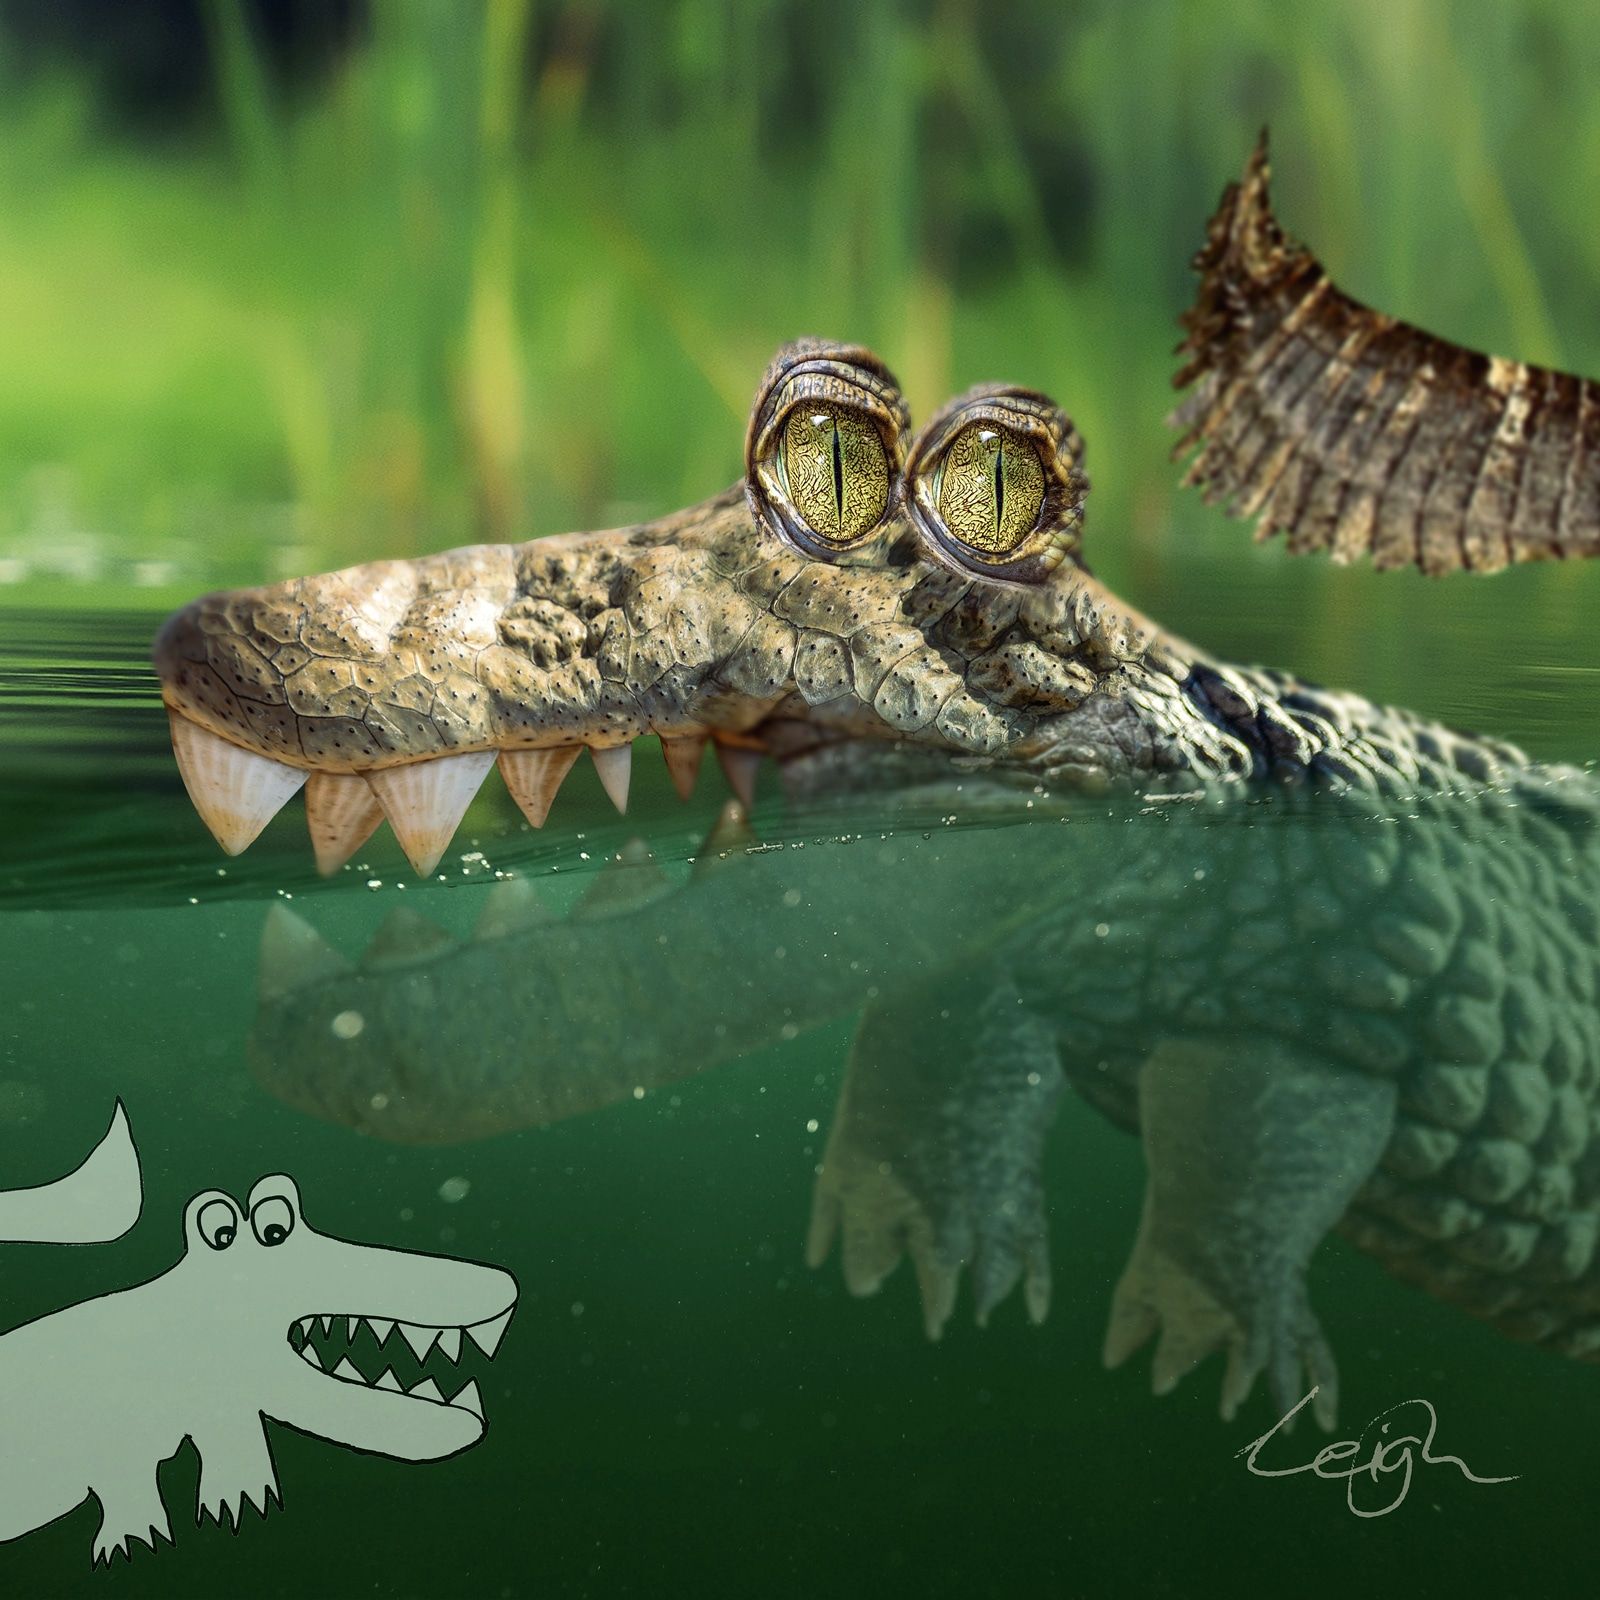 I photoshopped a drawing of a crocodile